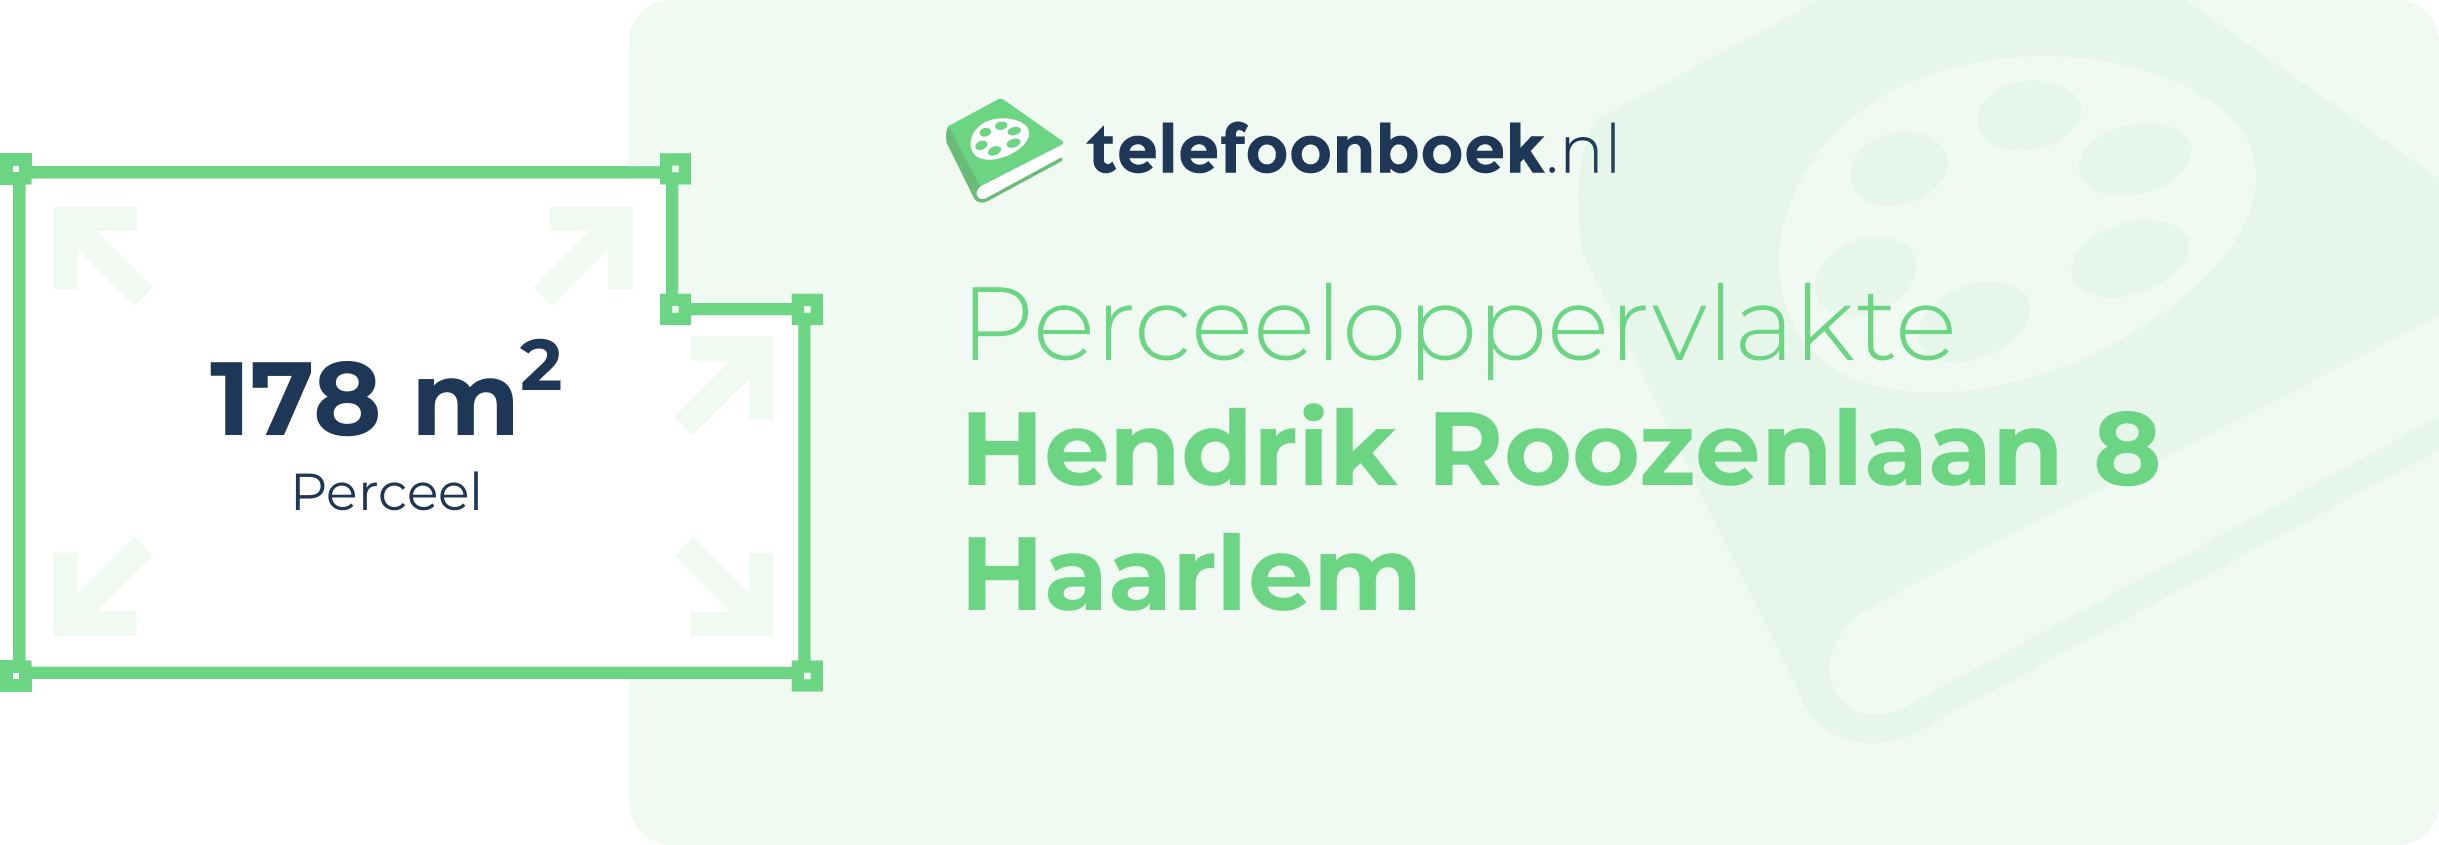 Perceeloppervlakte Hendrik Roozenlaan 8 Haarlem